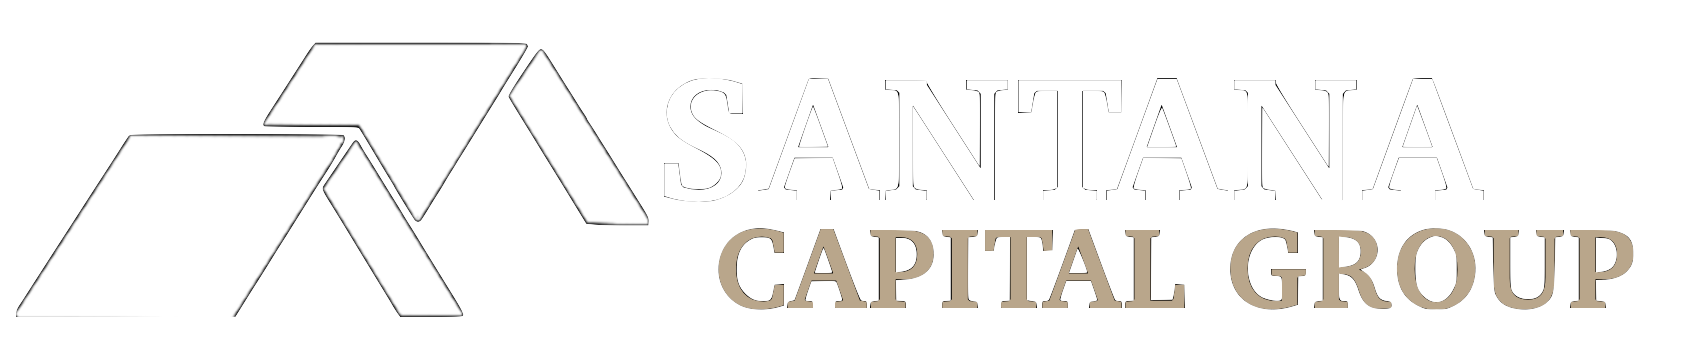 Santana Capital Group